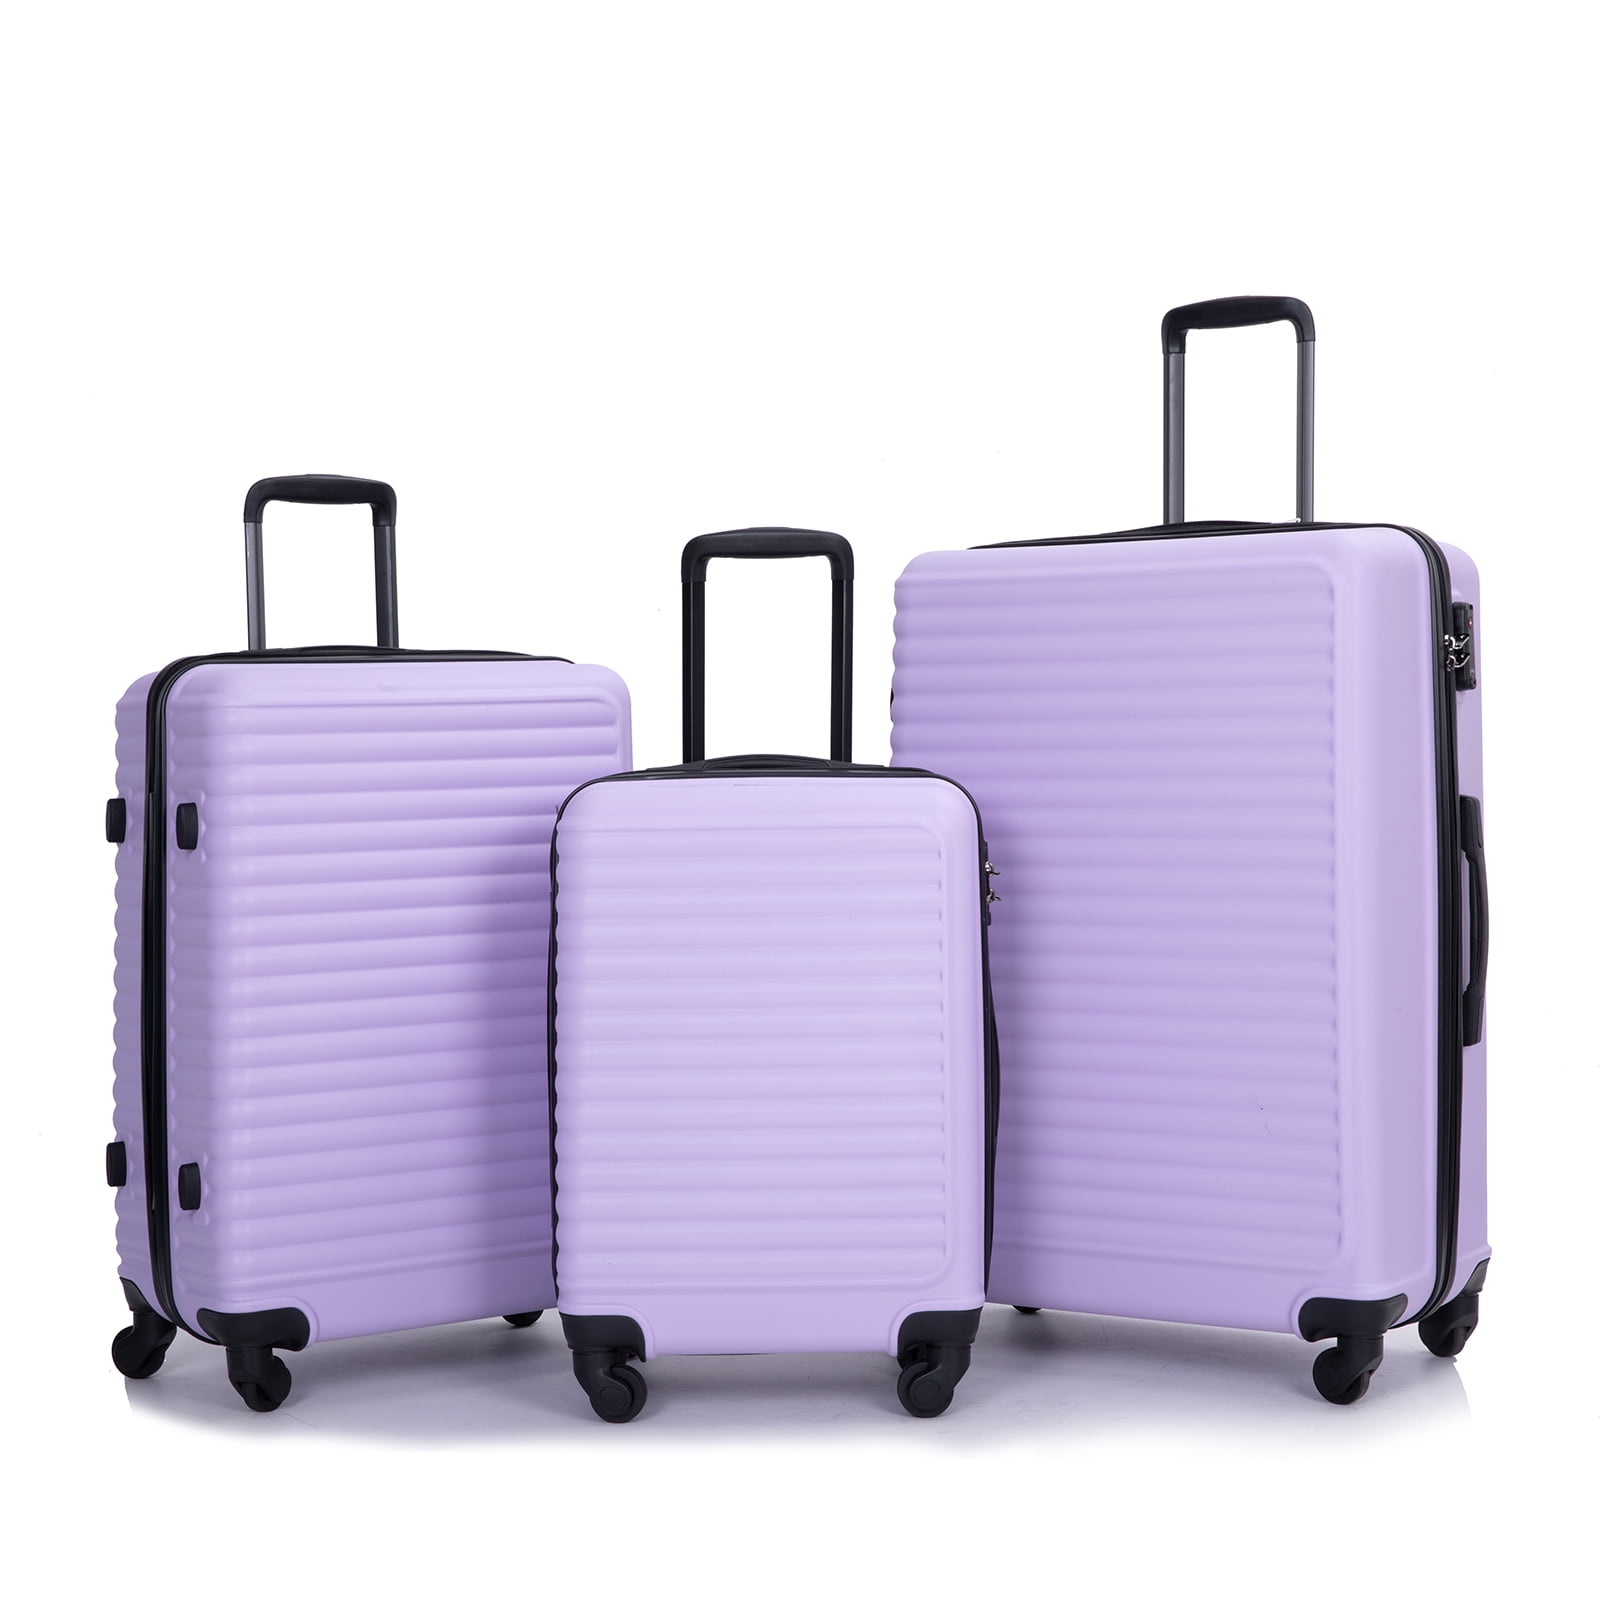 Travelhouse 3 Piece Hardside Luggage Set Hardshell Lightweight Suitcase with TSA Lock Spinner Wheels 20in24in28in.(Light Purple) - image 1 of 8